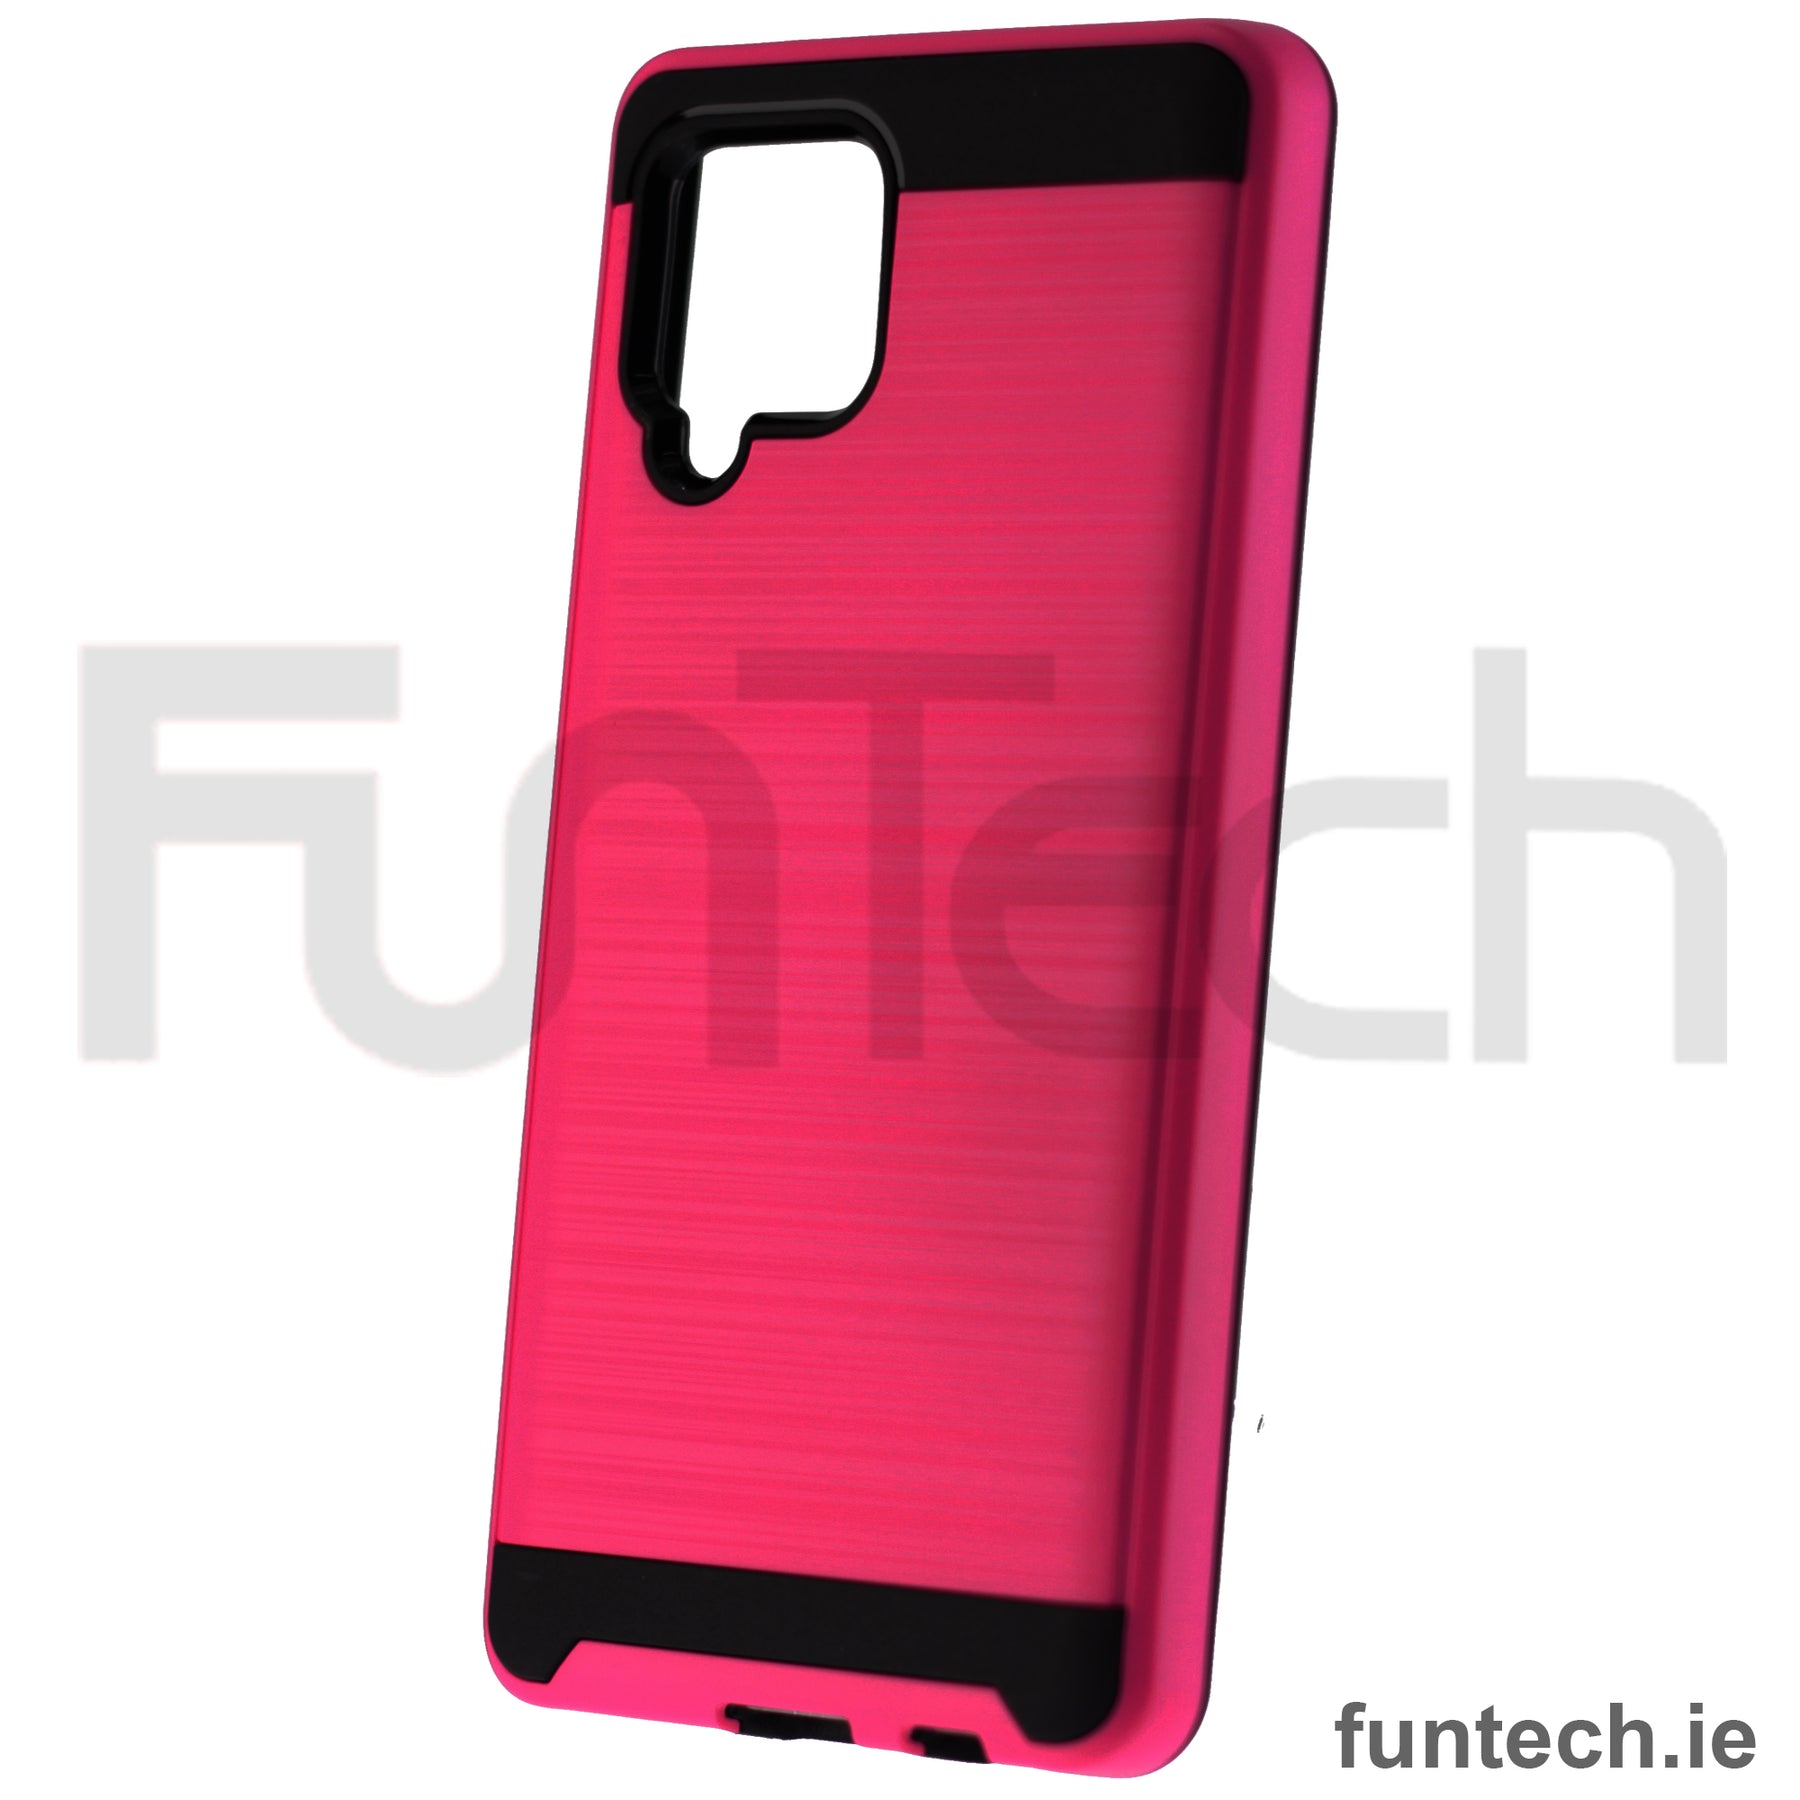 Samsung A42, Slim Armor Case, Color Pink.